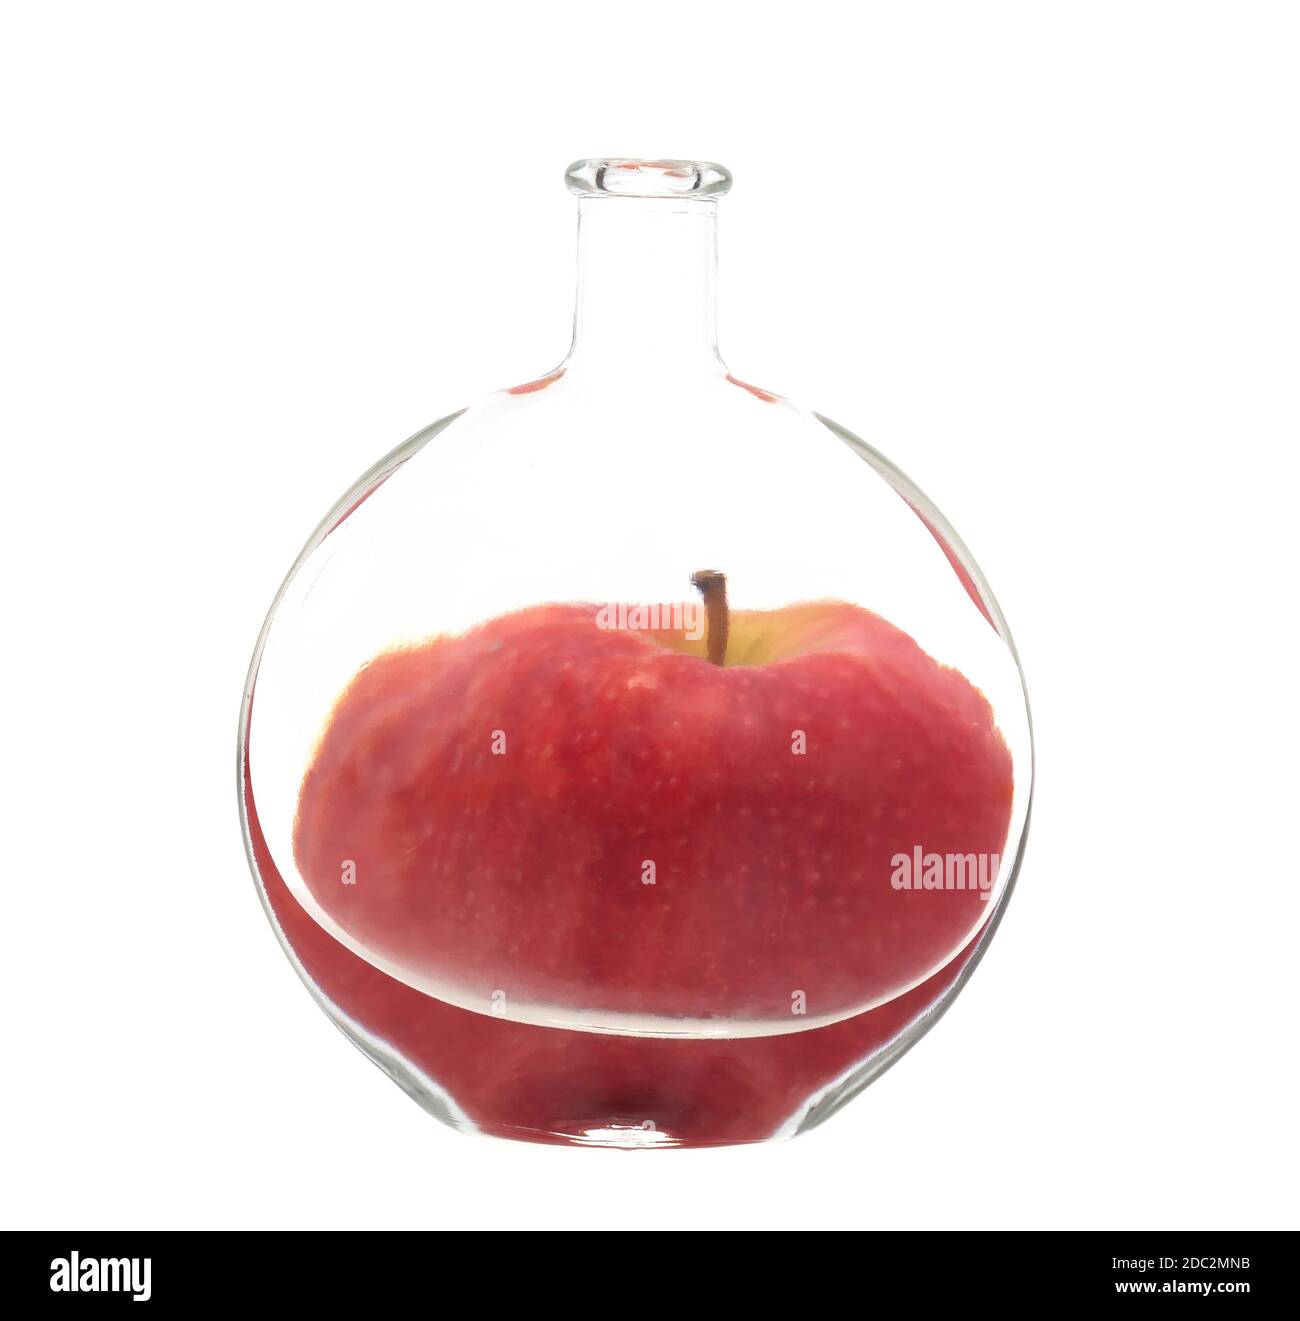 Botella de manzana. Distorsión, refracción a través del concepto de agua, conceptual. Foto de stock